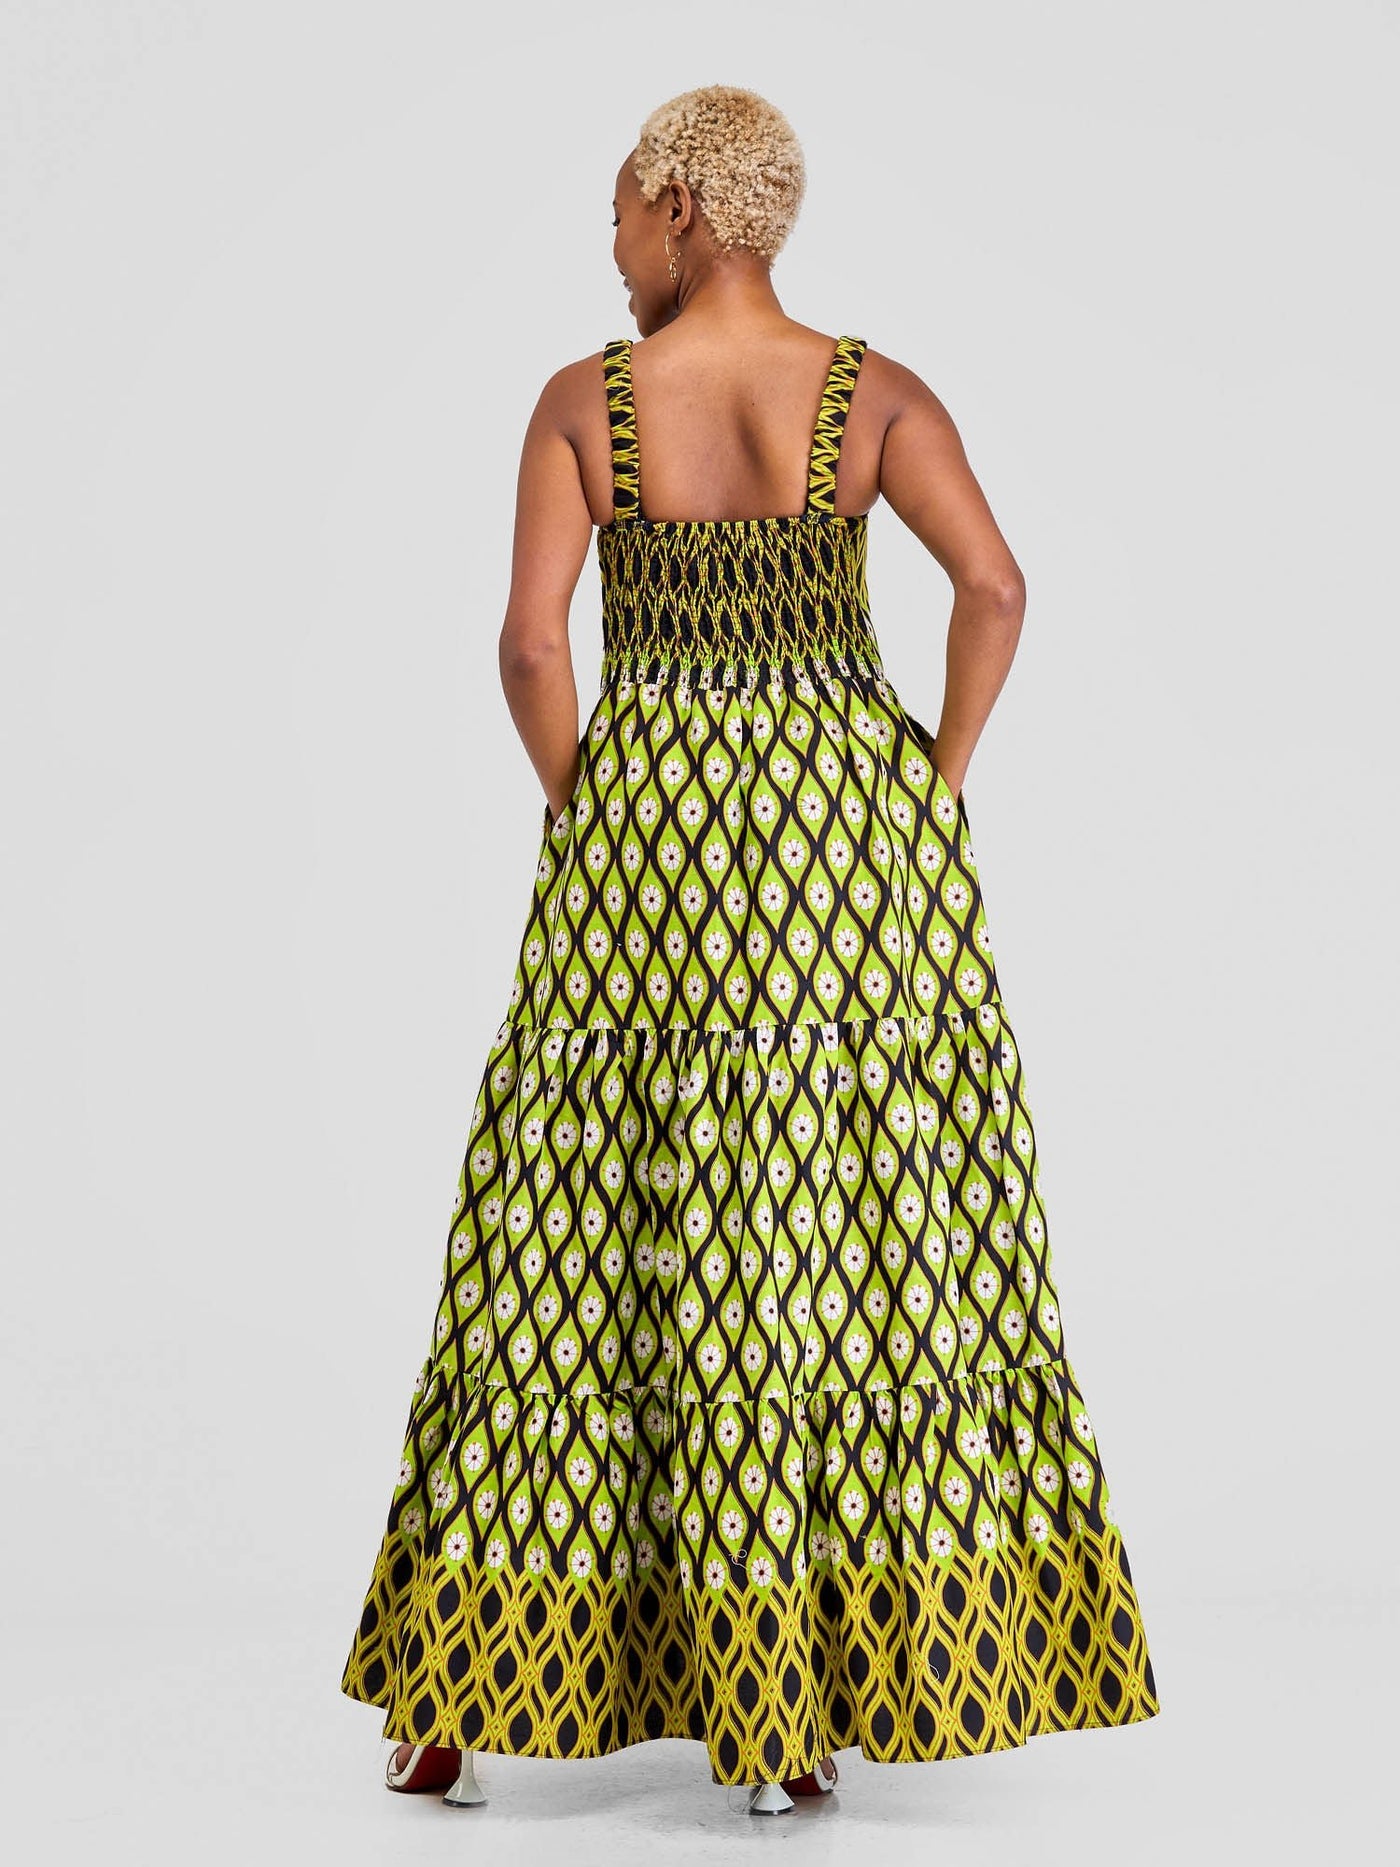 Vivo Kitenge Strappy Tiered Maxi Dress - Lime Green / Black Ankara Print - Shopzetu